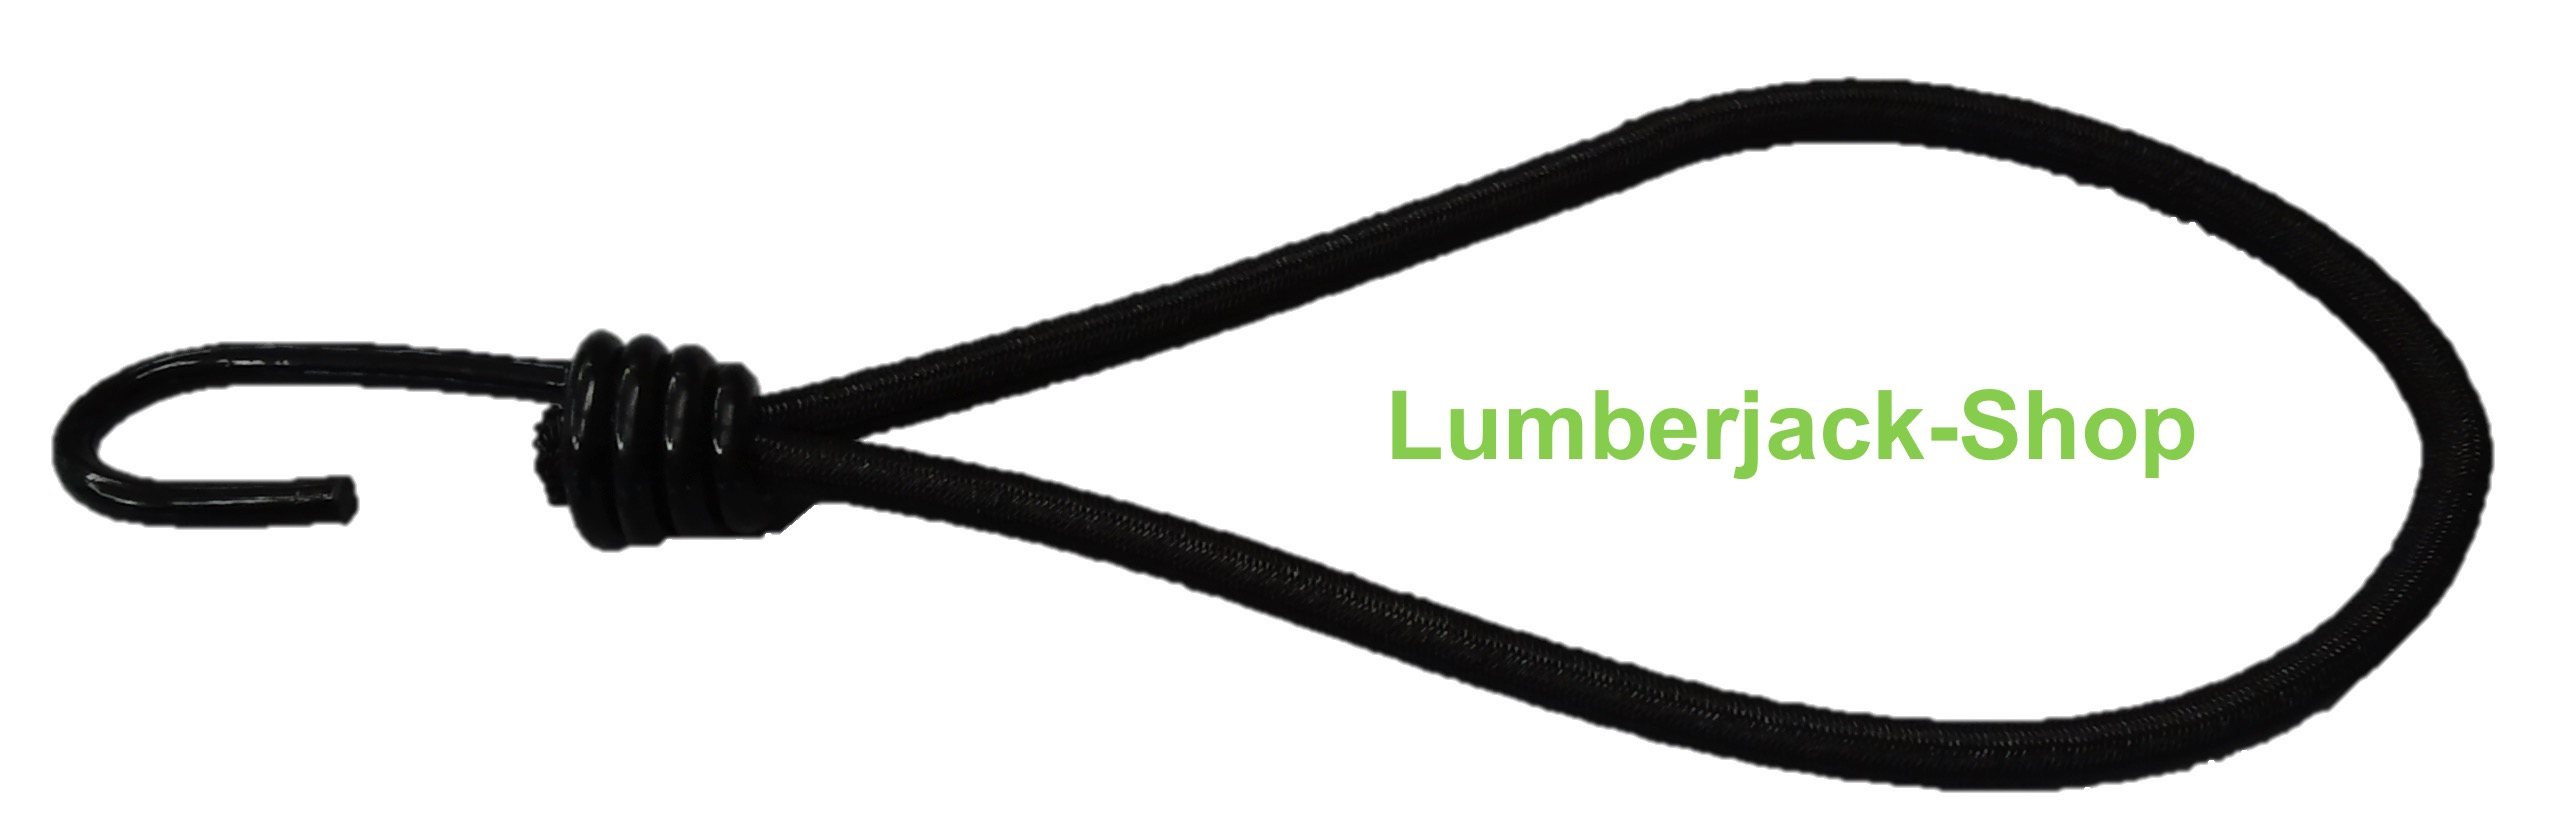 https://www.lumberjack-shop.de/media/image/f3/40/40/Gummihaken-Netzbefestigung.jpg